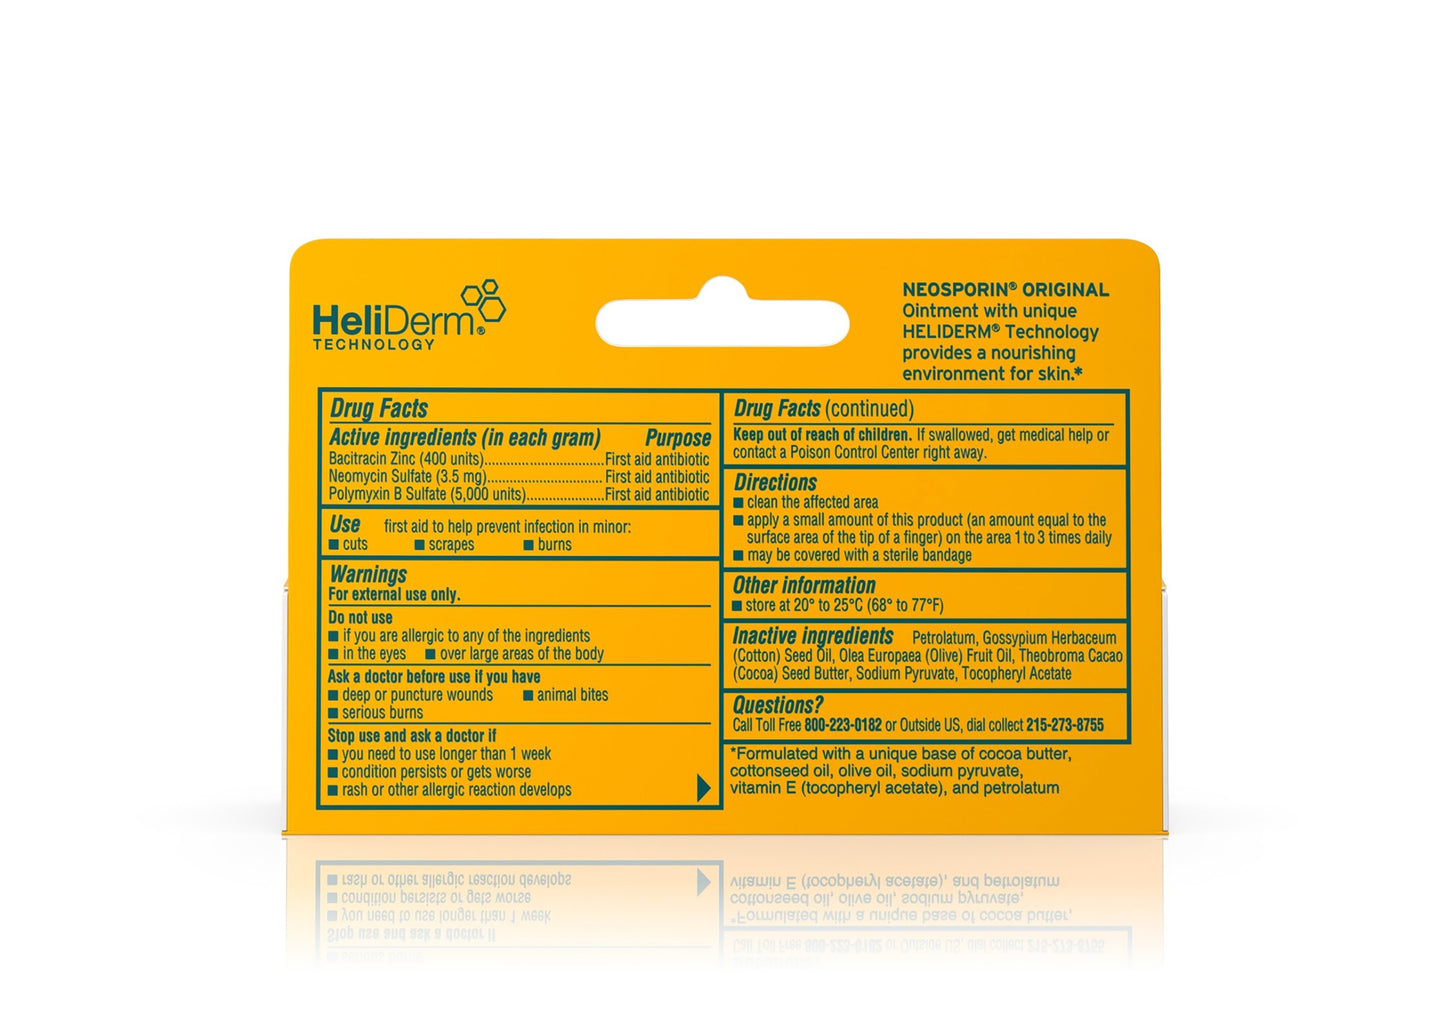 Neosporin® First Aid Antibiotic Ointment, 0.5 oz. Tube, 6 ct